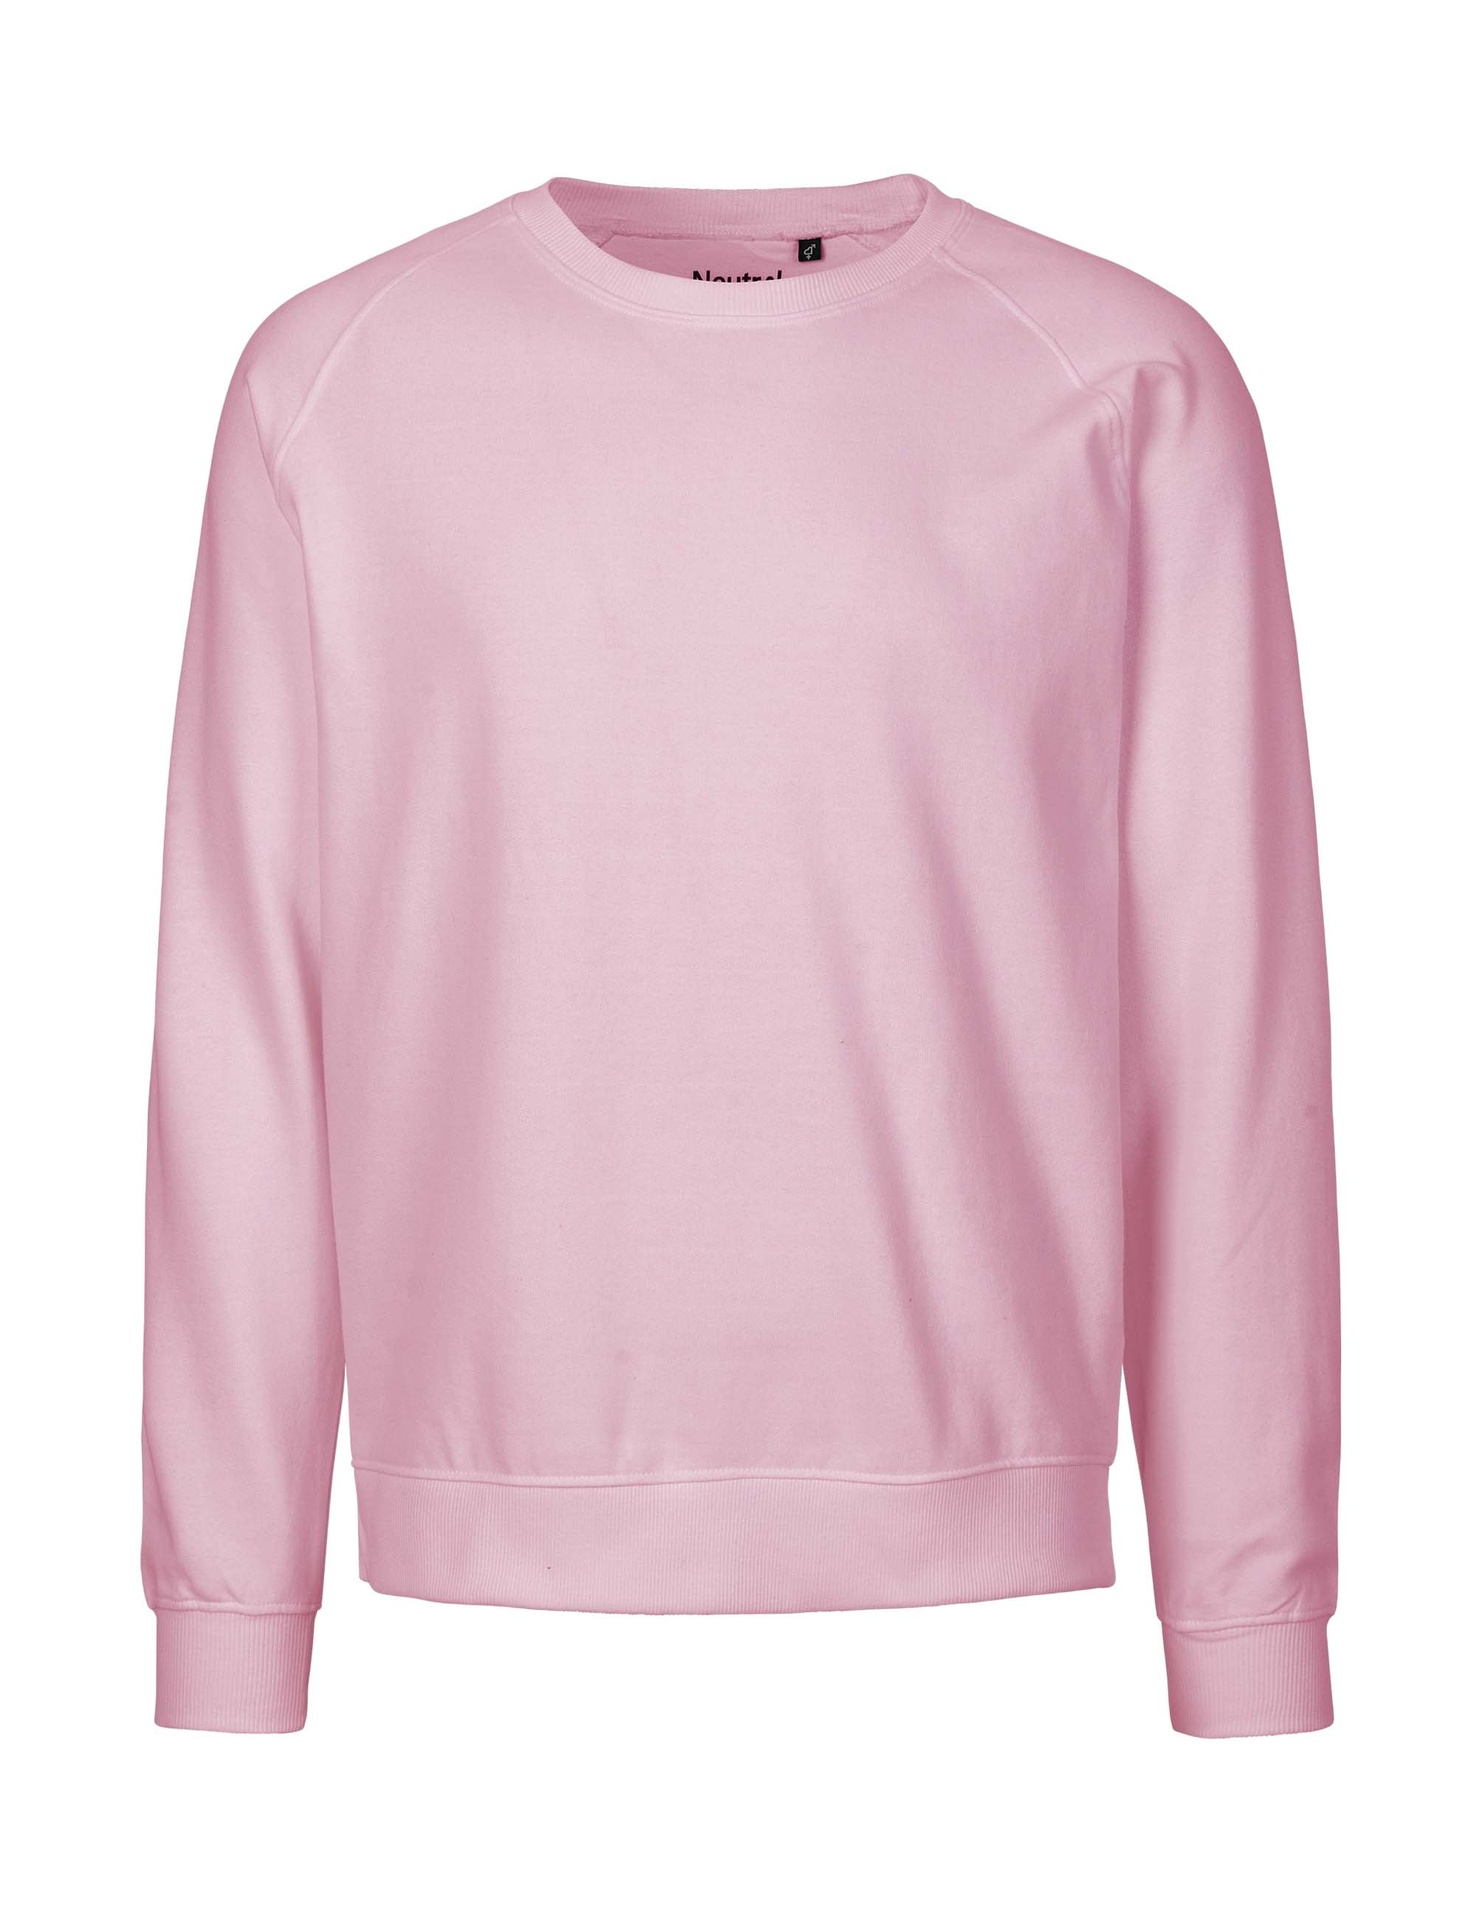 [PR/02737] Unisex Sweatshirt (Light Pink 20, XL)